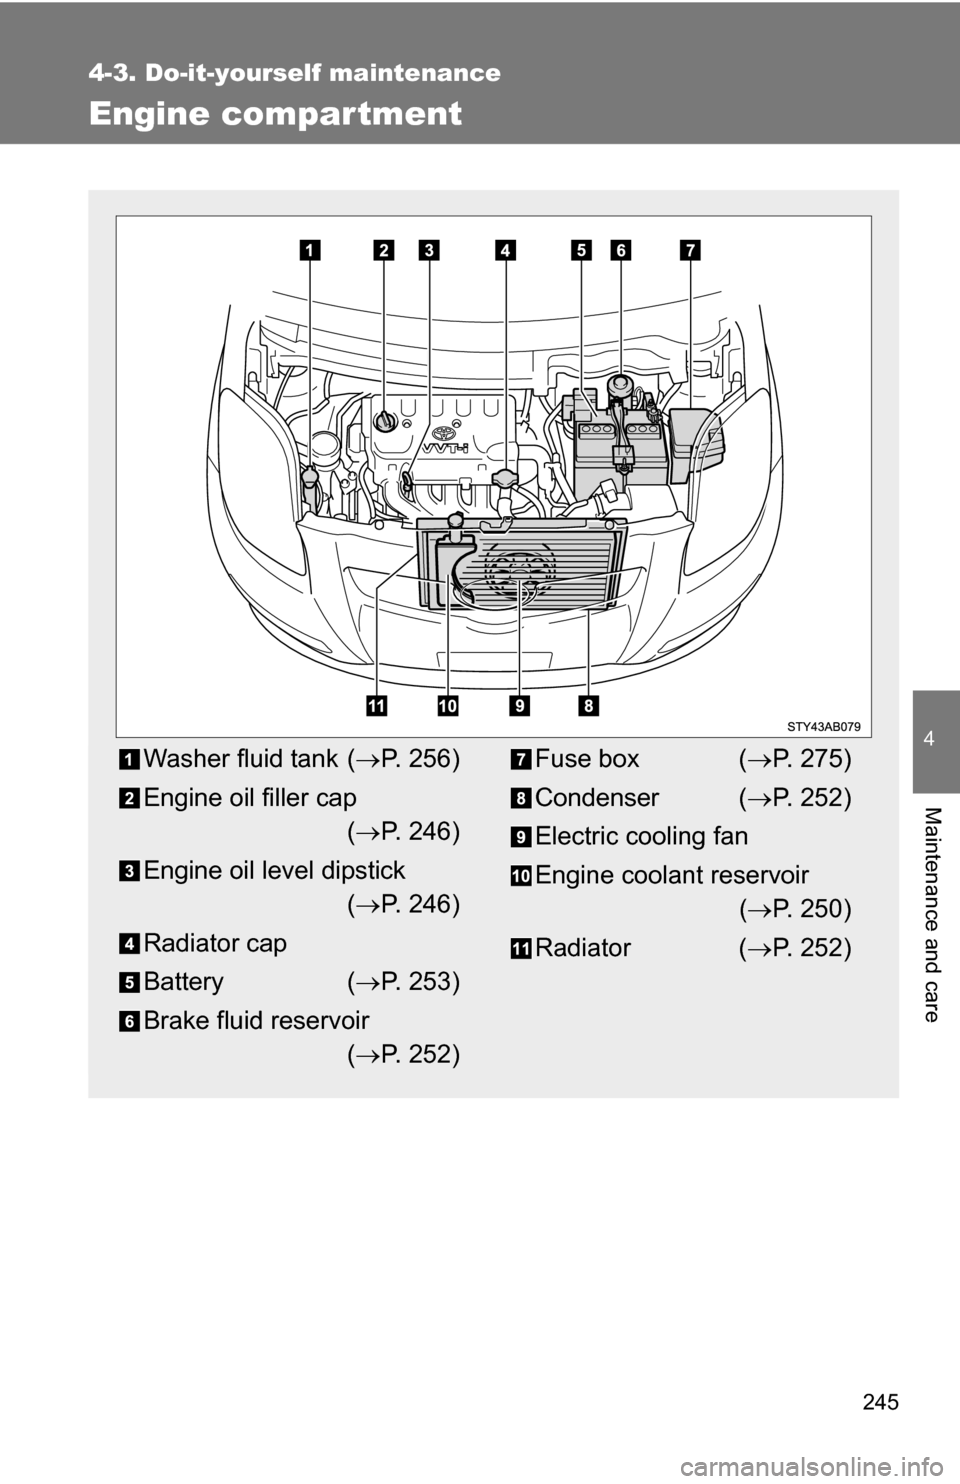 TOYOTA YARIS 2009 2.G Owners Manual 245
4-3. Do-it-yourself maintenance
4
Maintenance and care
Engine compar tment
Washer fluid tank (P. 256)
Engine oil filler cap ( P. 246)
Engine oil level dipstick ( P. 246)
Radiator cap
Batt